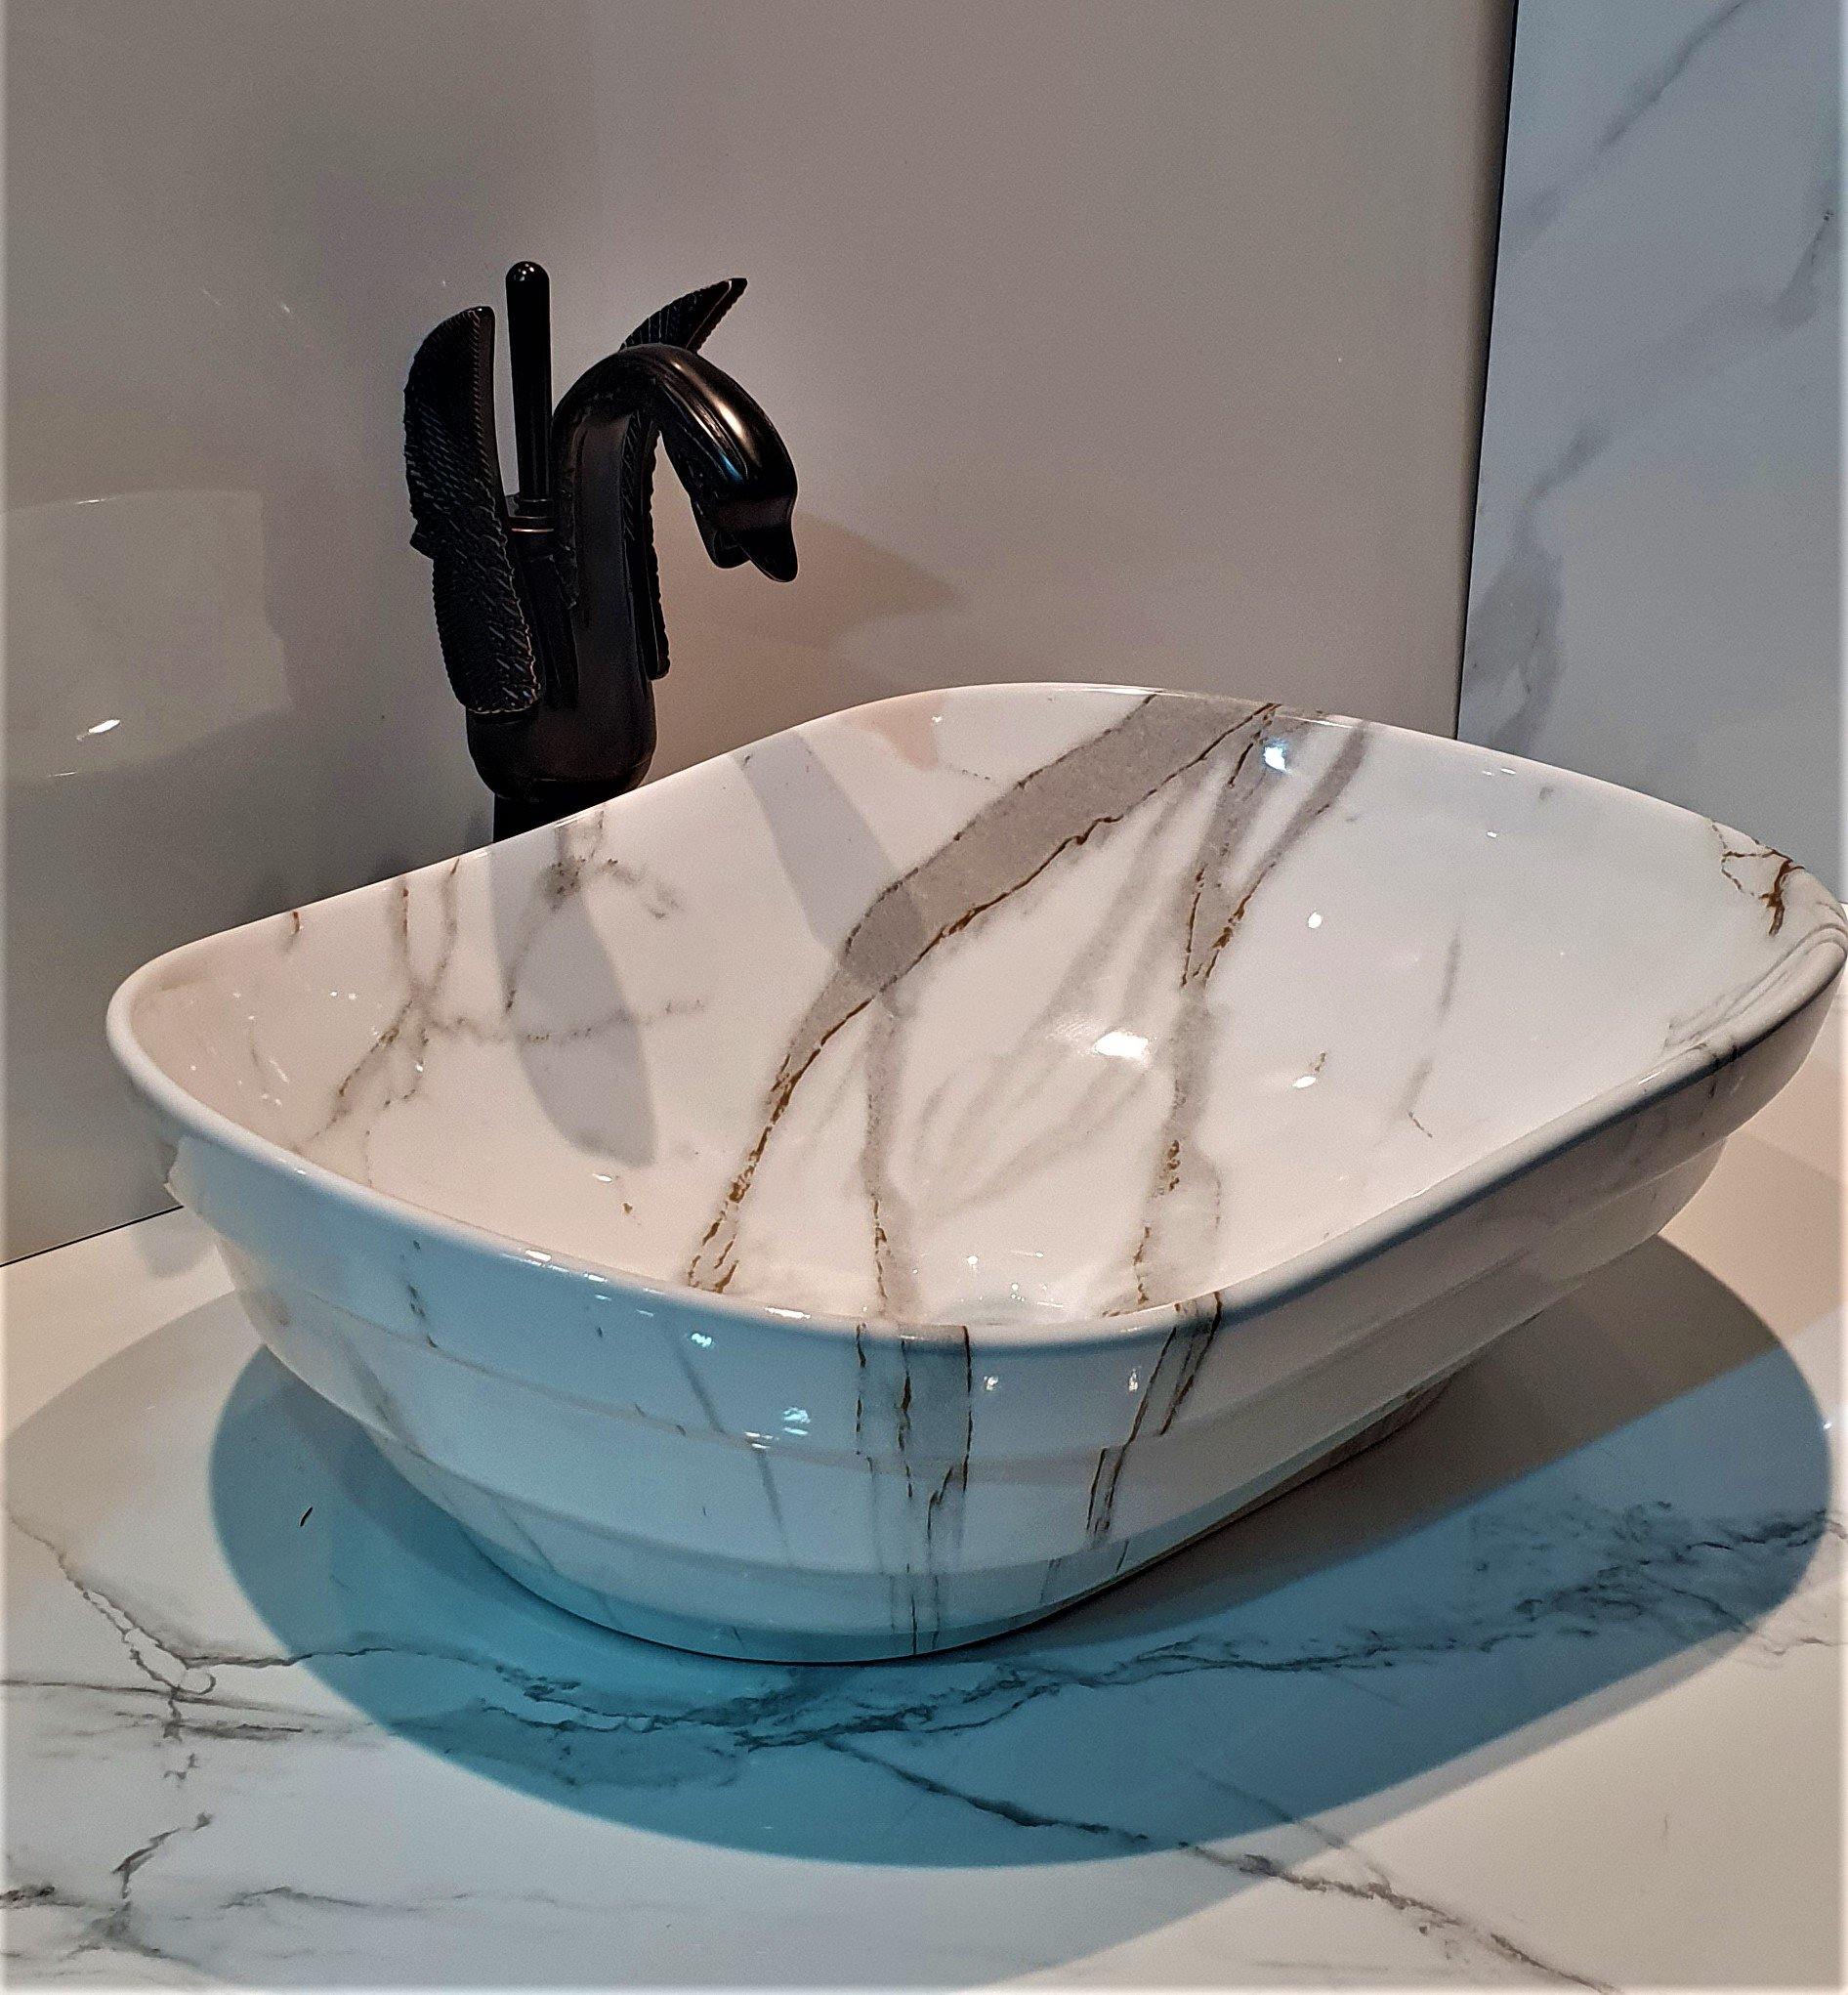 Ceramic Oval Shape Wash Basin Table Top Vessel Sink Wash Basin Over Counter Basin for Bathroom & Living Room 18 X 14 X 5.5 Inch (White & Black) - Bath Outlet